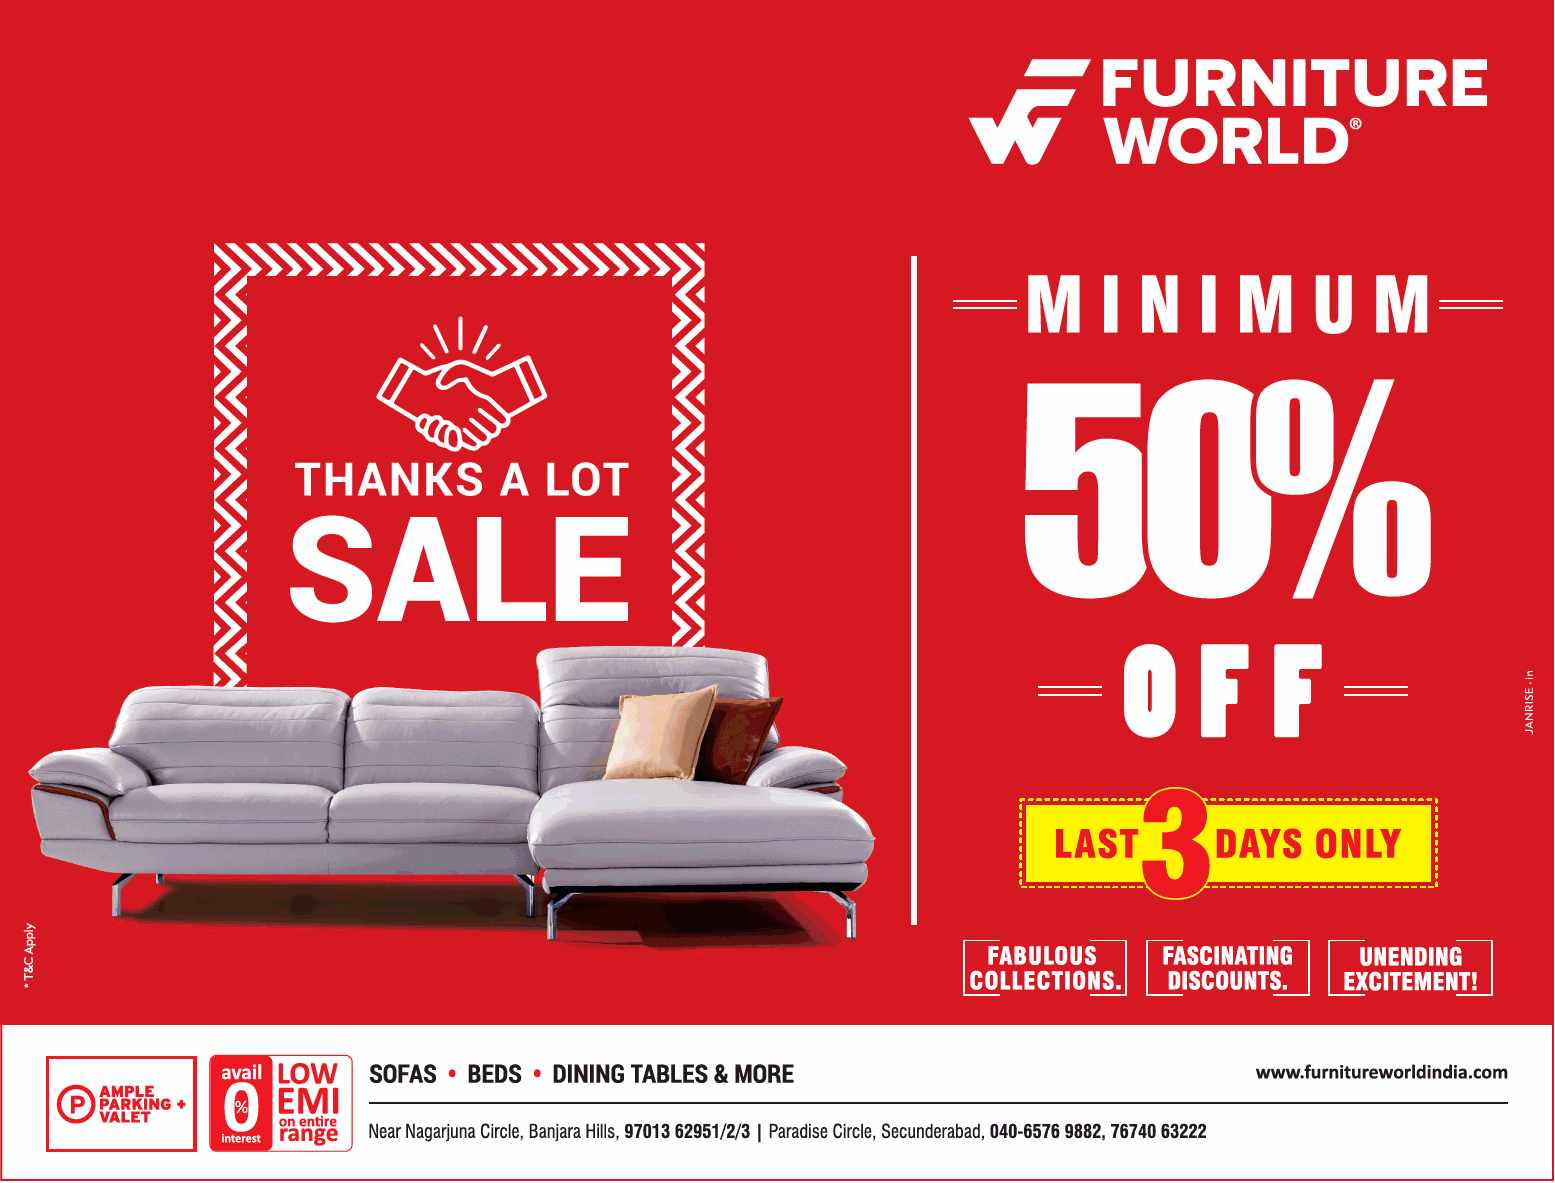 Furniture World Thanks A Lot Sale Minimum 50% Off Ad - Advert Gallery